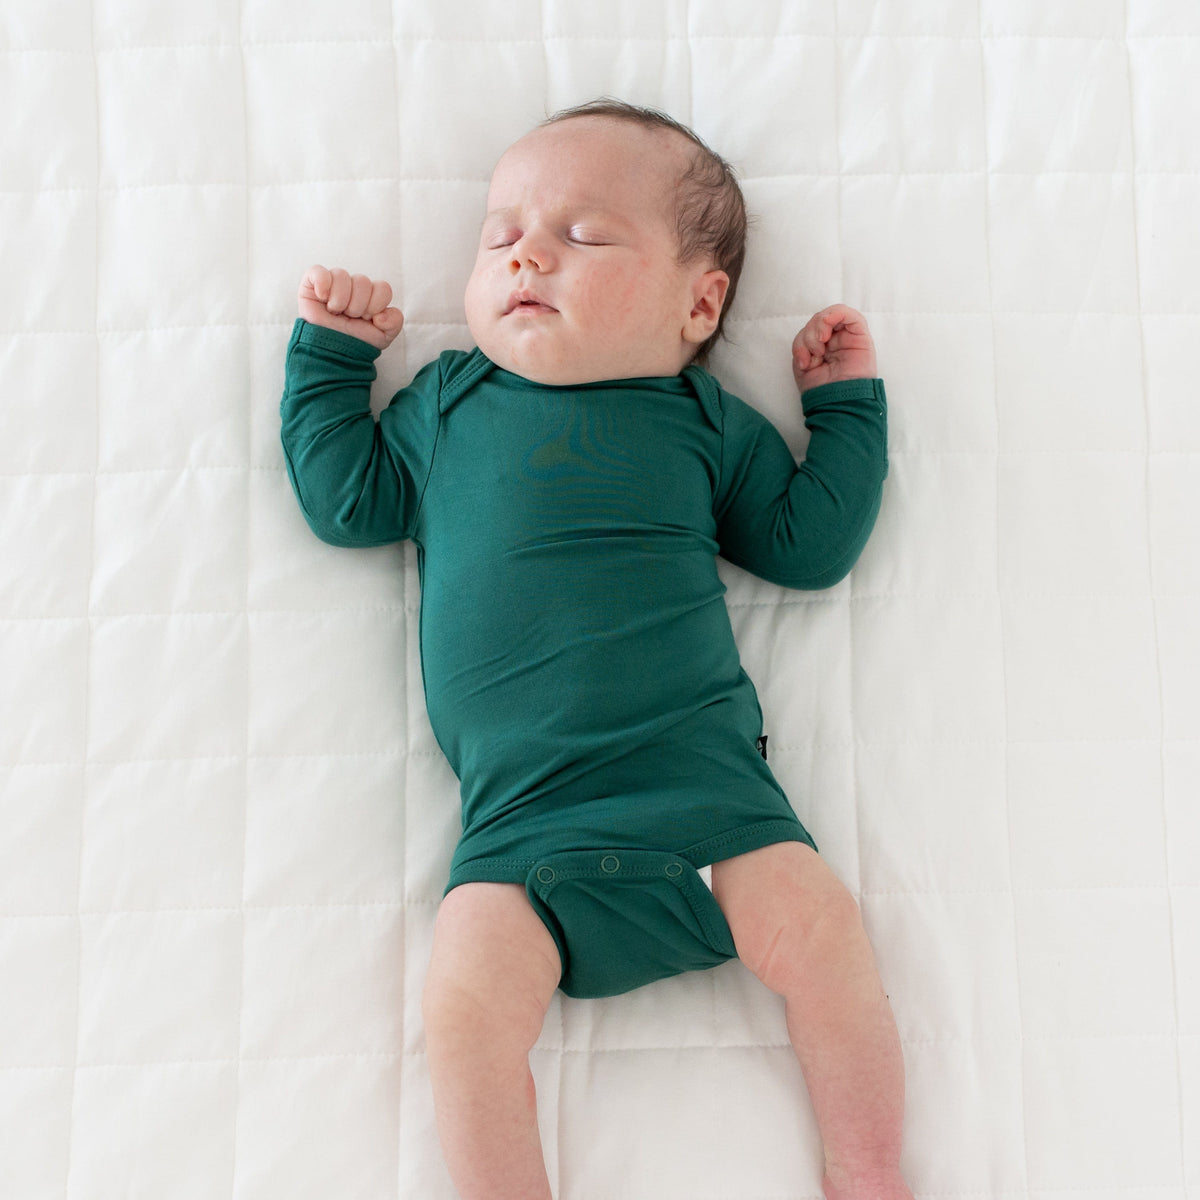 Baby wearing Kyte Baby Long Sleeve infant Bodysuit in Emerald